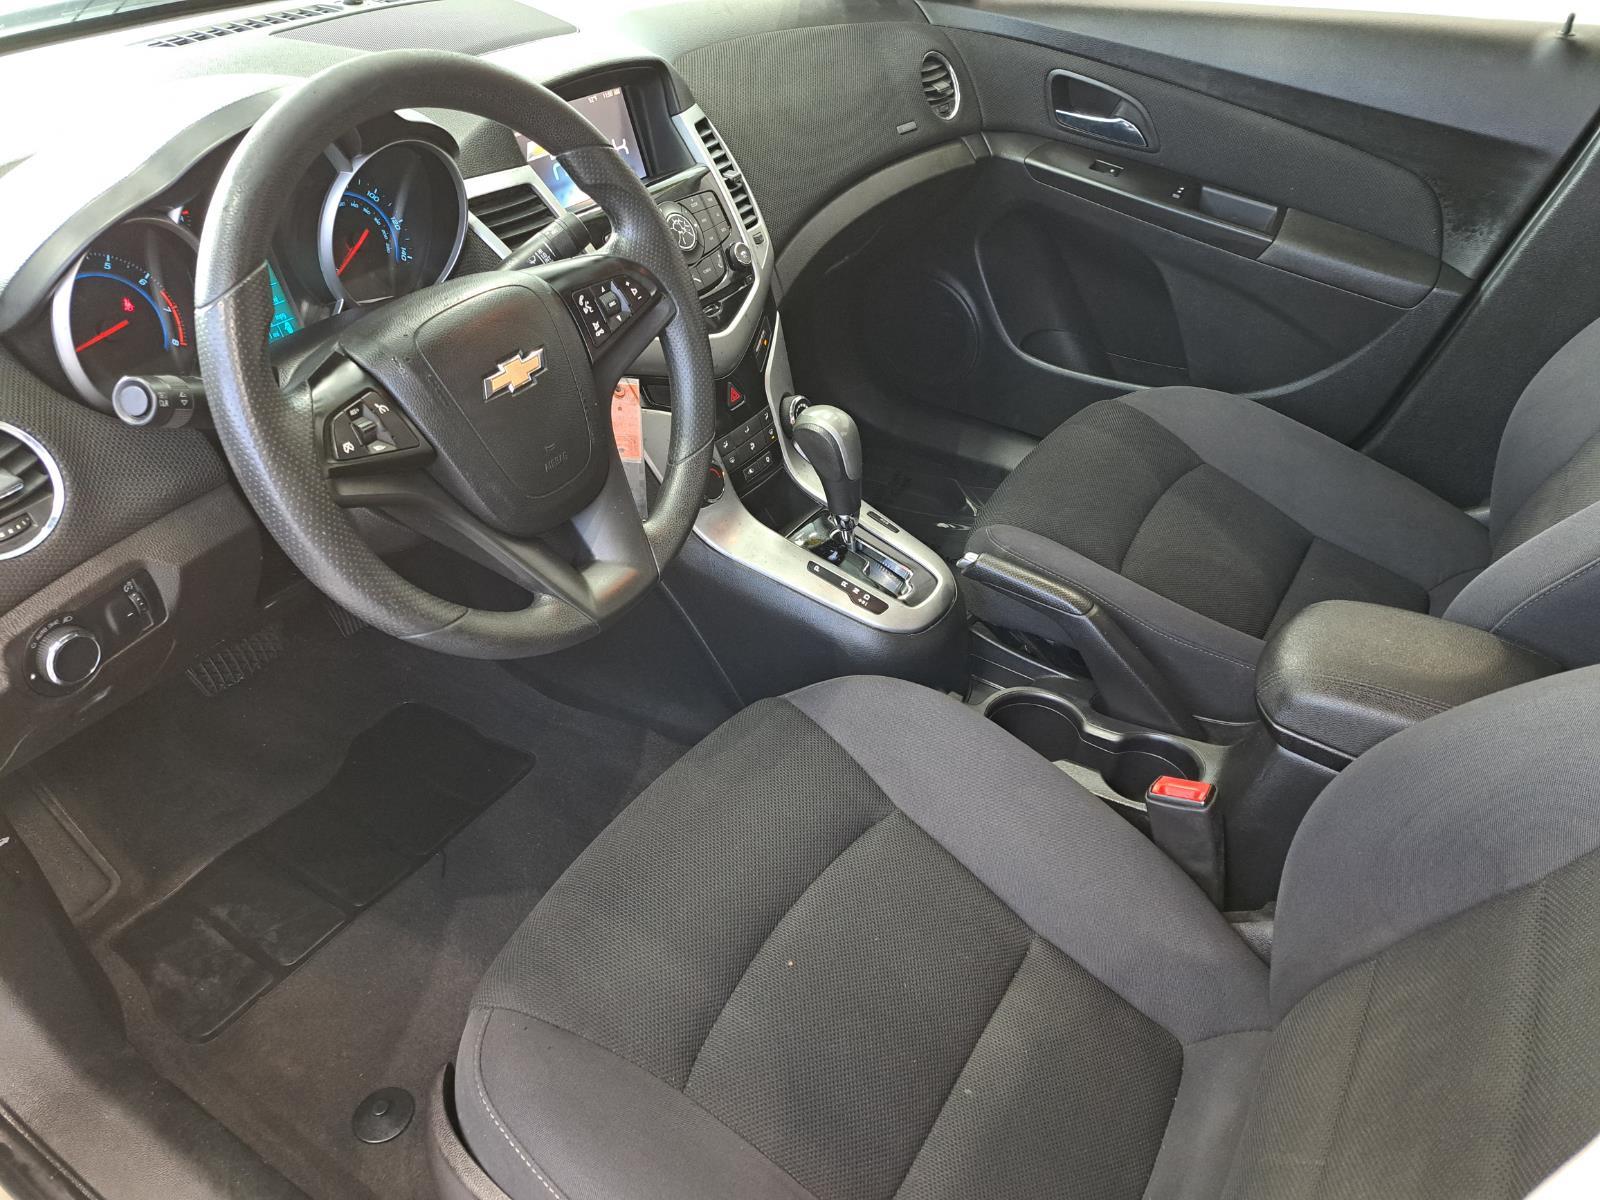 2015 Chevrolet Cruze LT Sedan 4 Dr. Front Wheel Drive 8